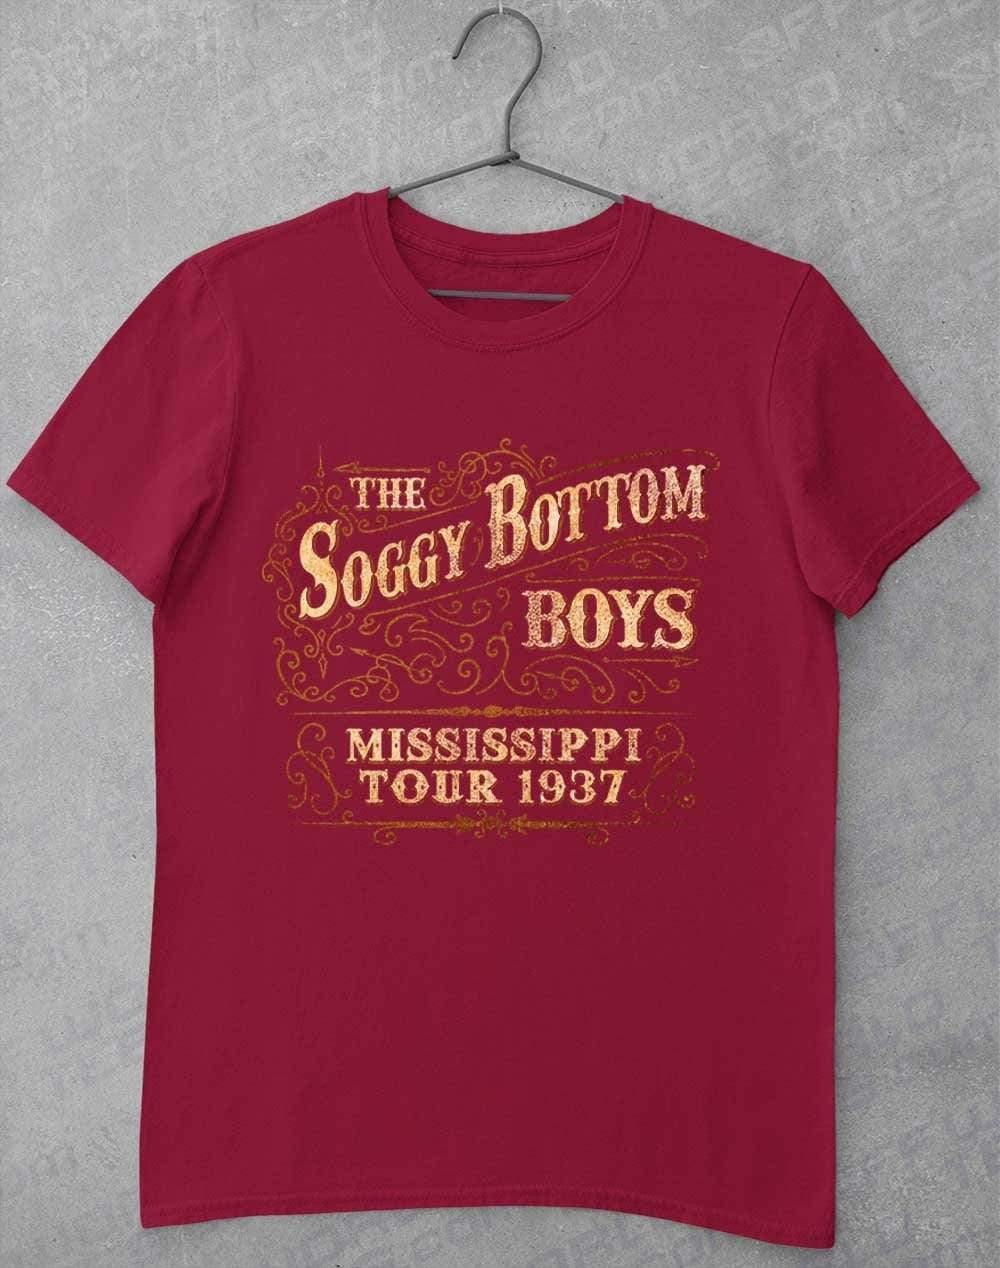 Soggy Bottom Boys Tour 1937 T-Shirt S / Cardinal Red  - Off World Tees